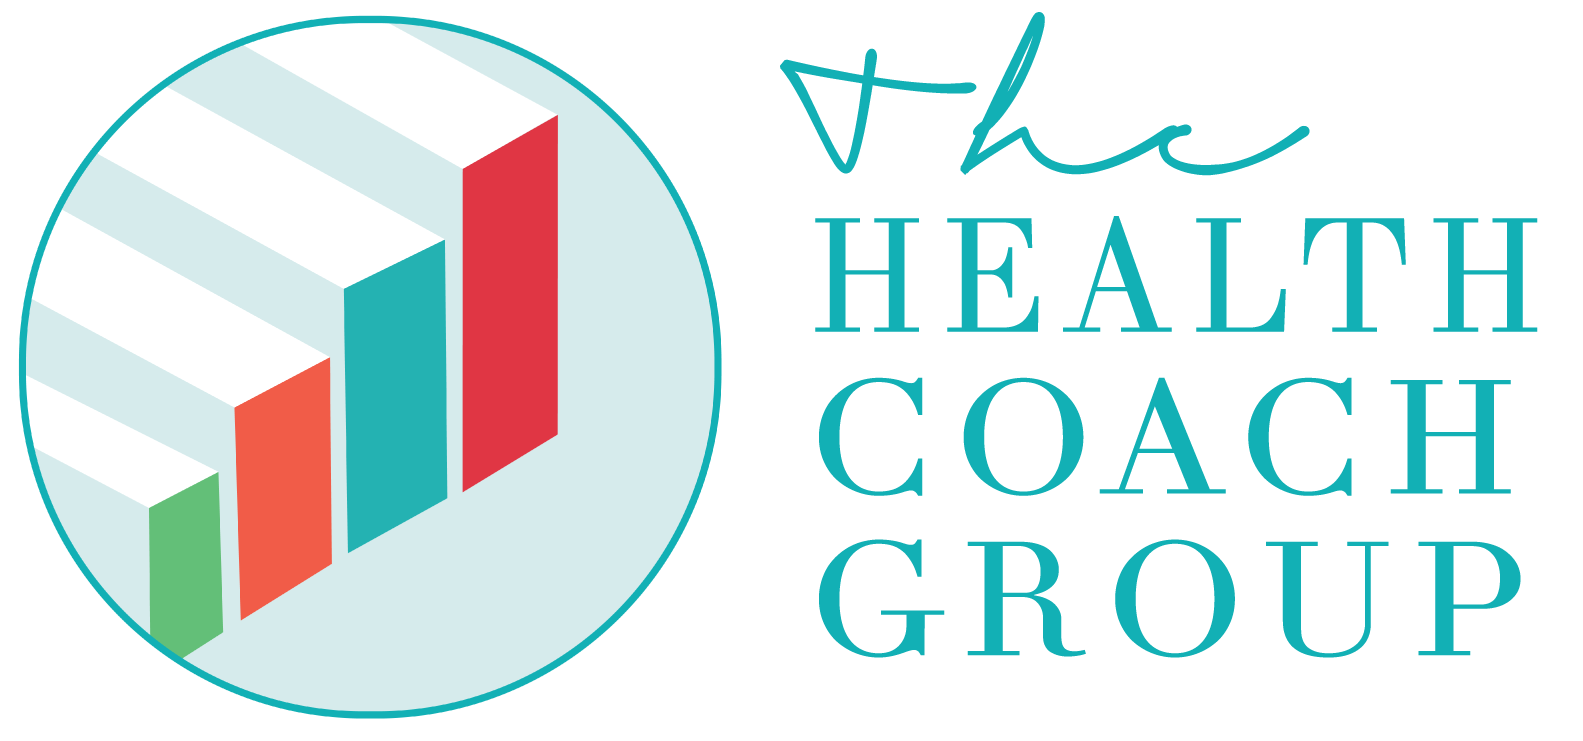 The Health Coach Group